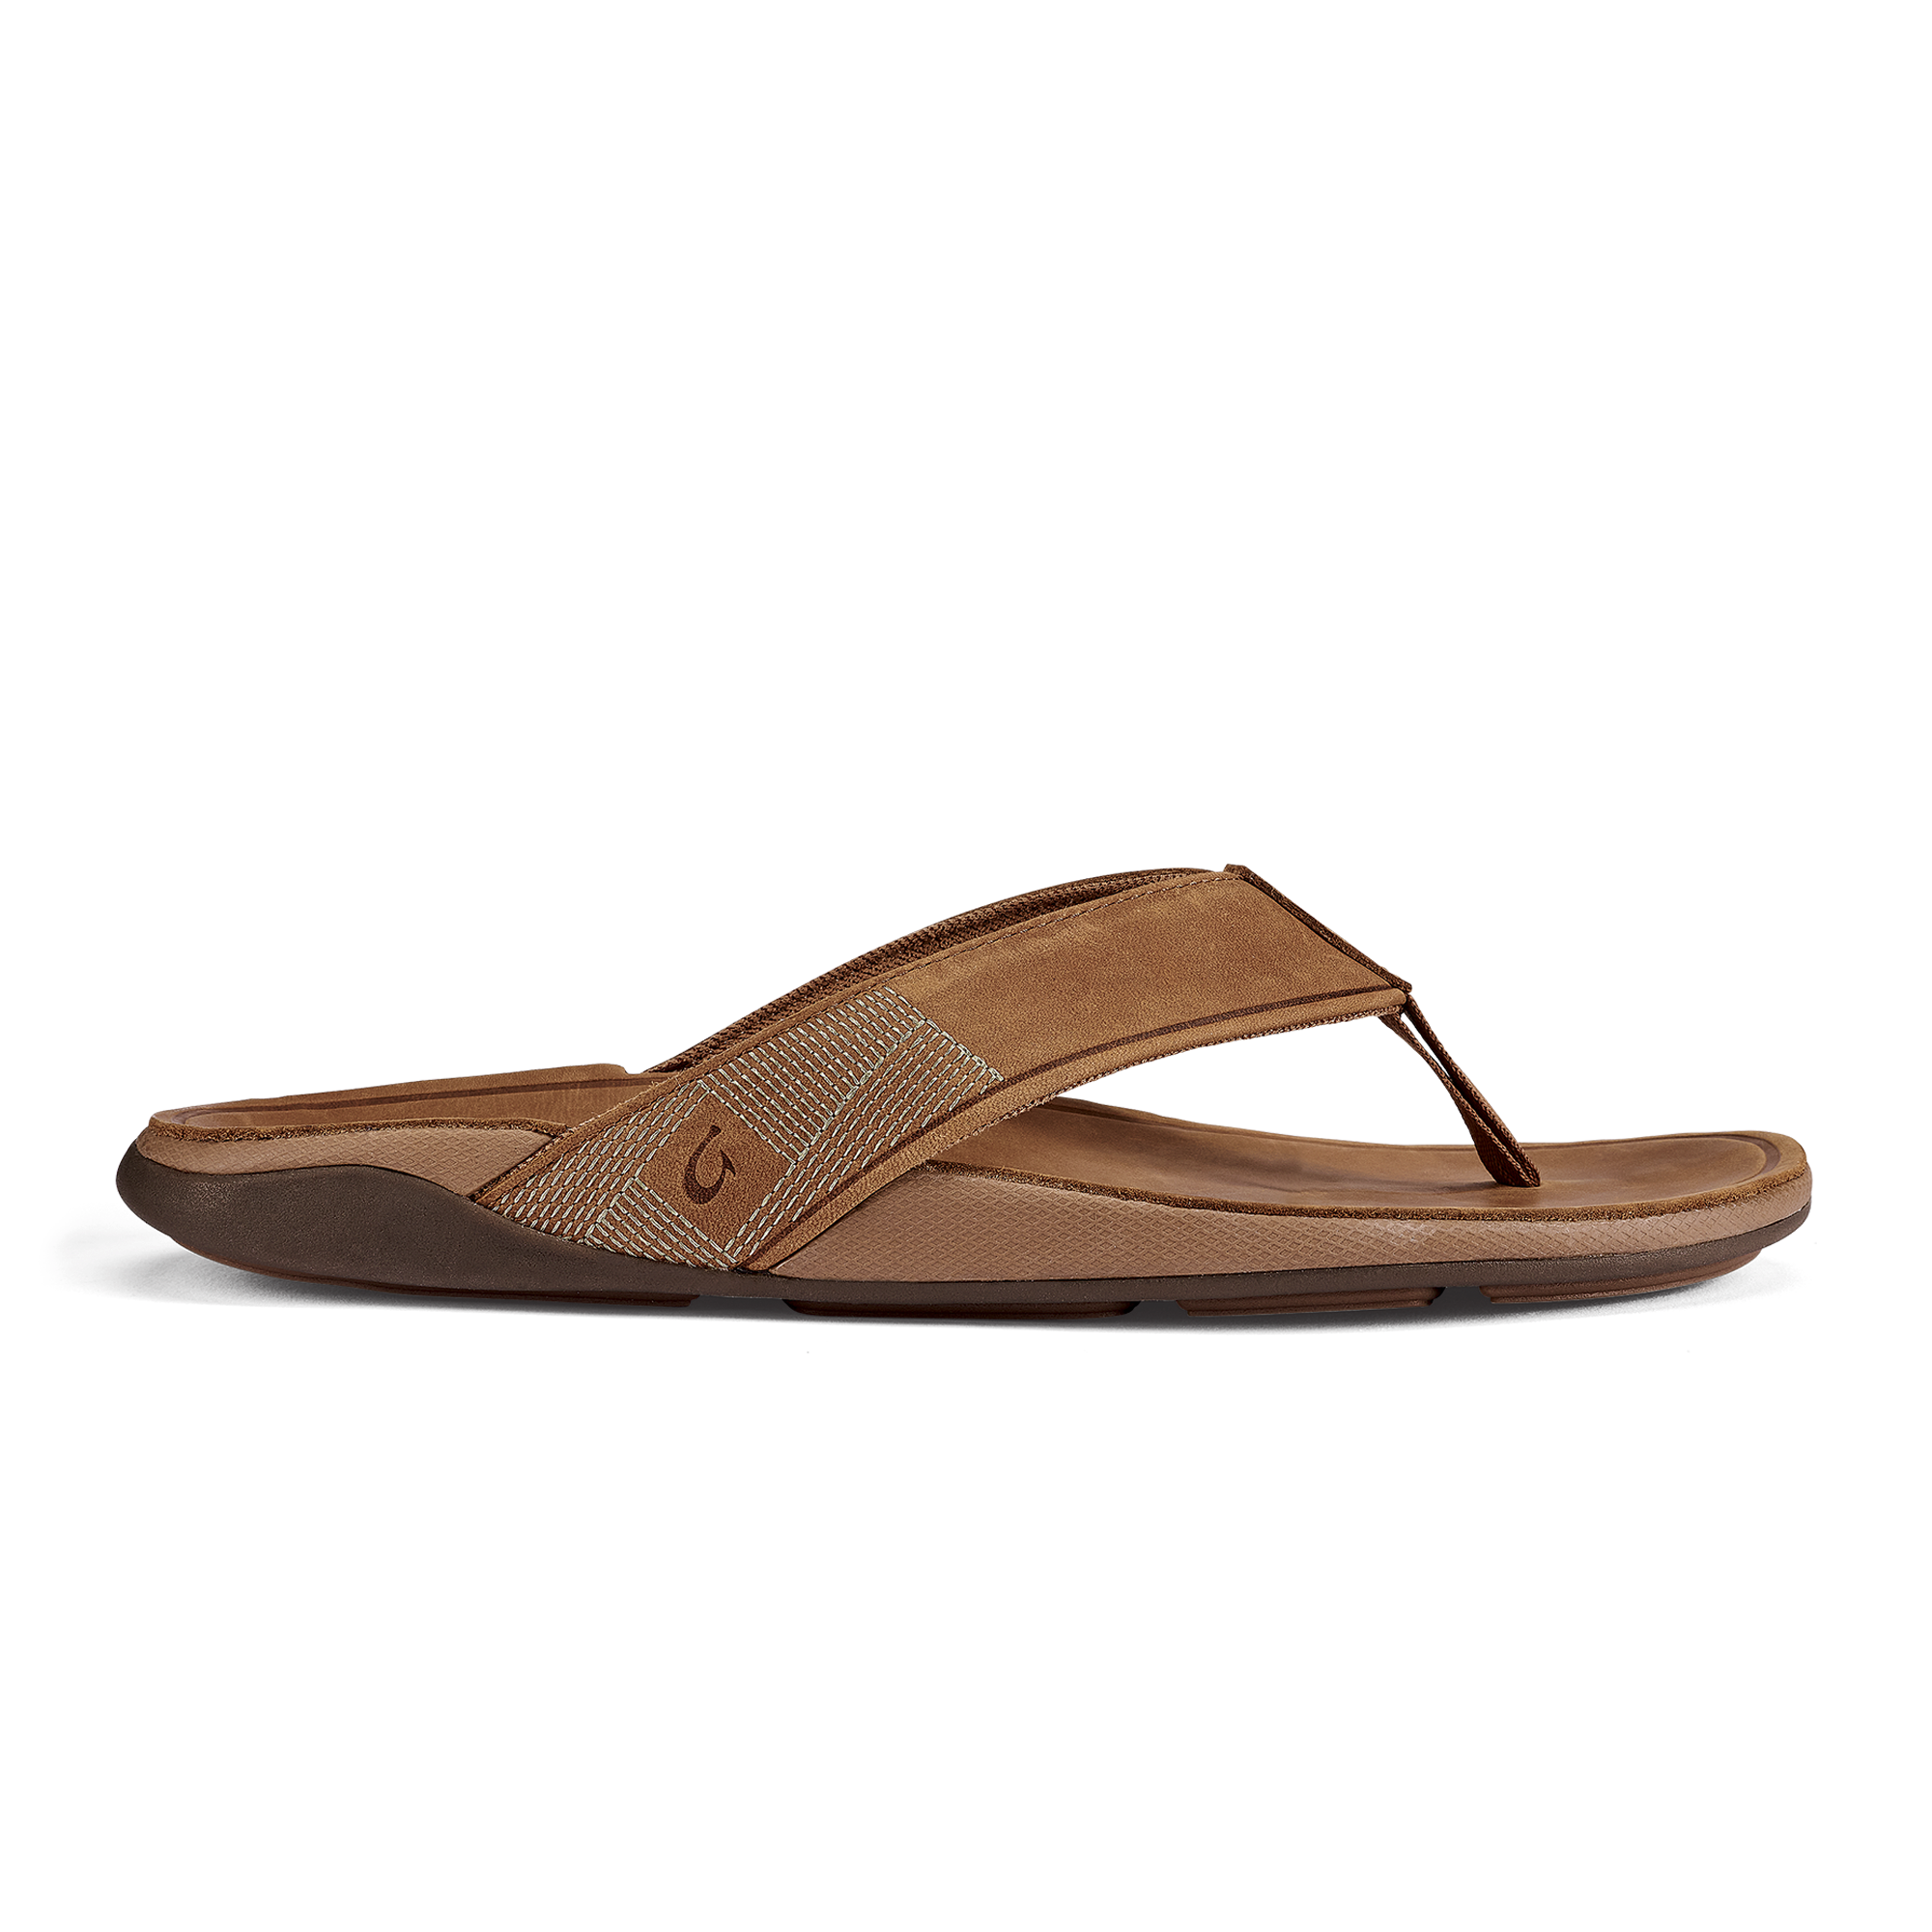 Ohana Men's Beach Sandals - Tan / Dark Java